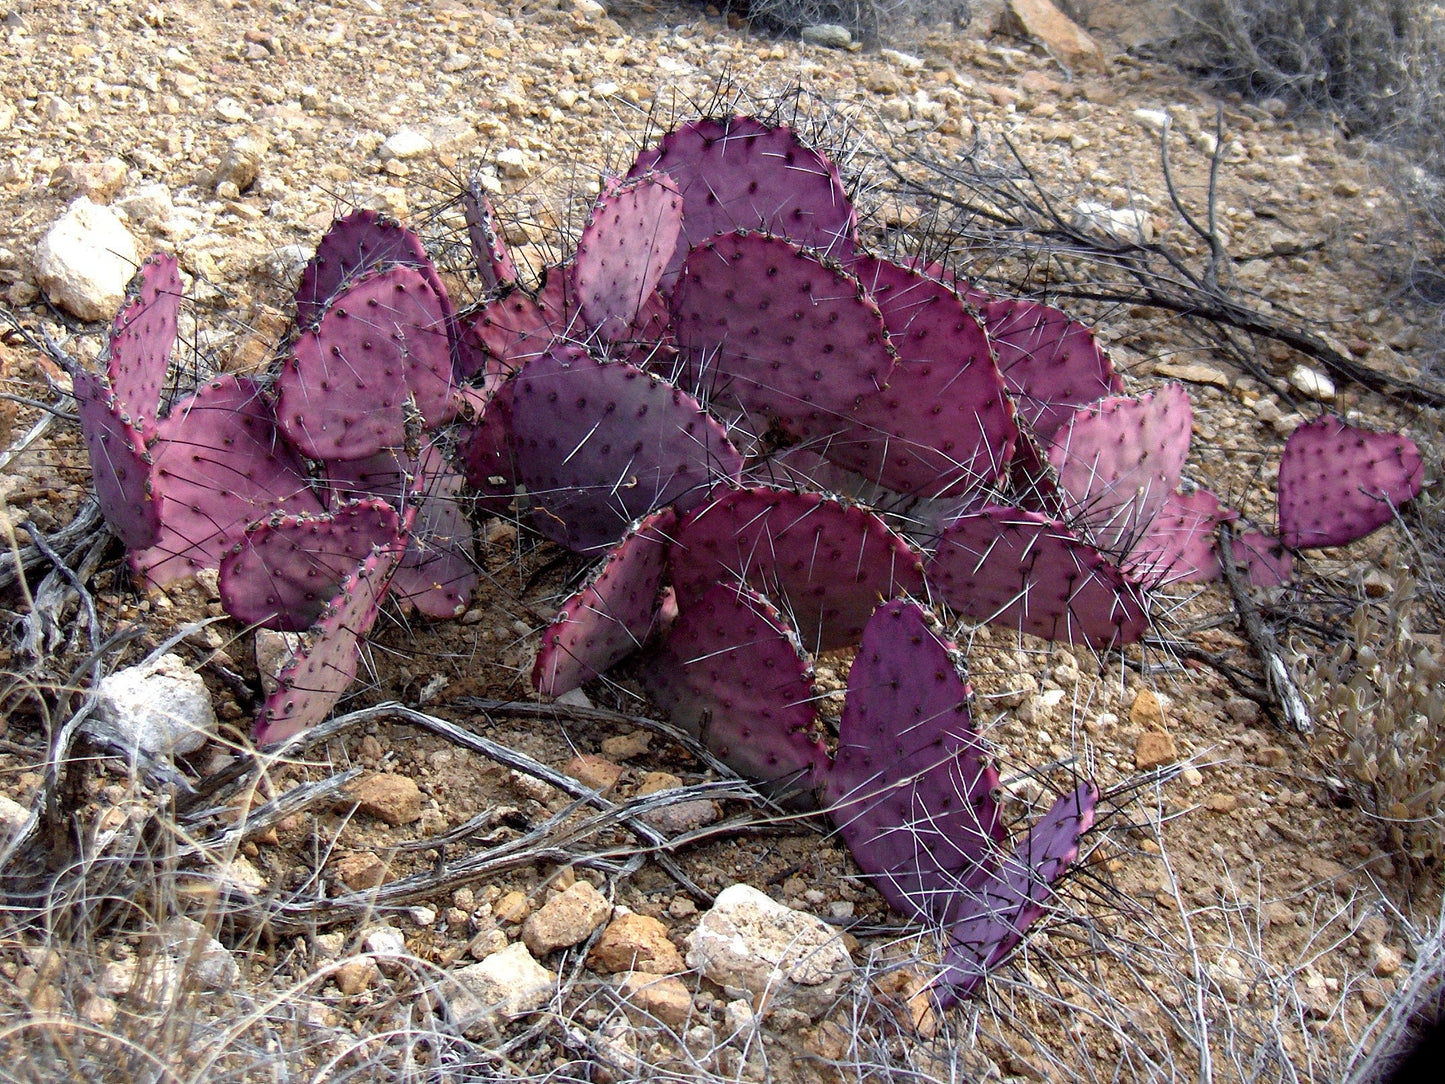 Opuntia Macrocentra * Mini Purple Prickly Pear Cactus * 5 Rare Seeds *